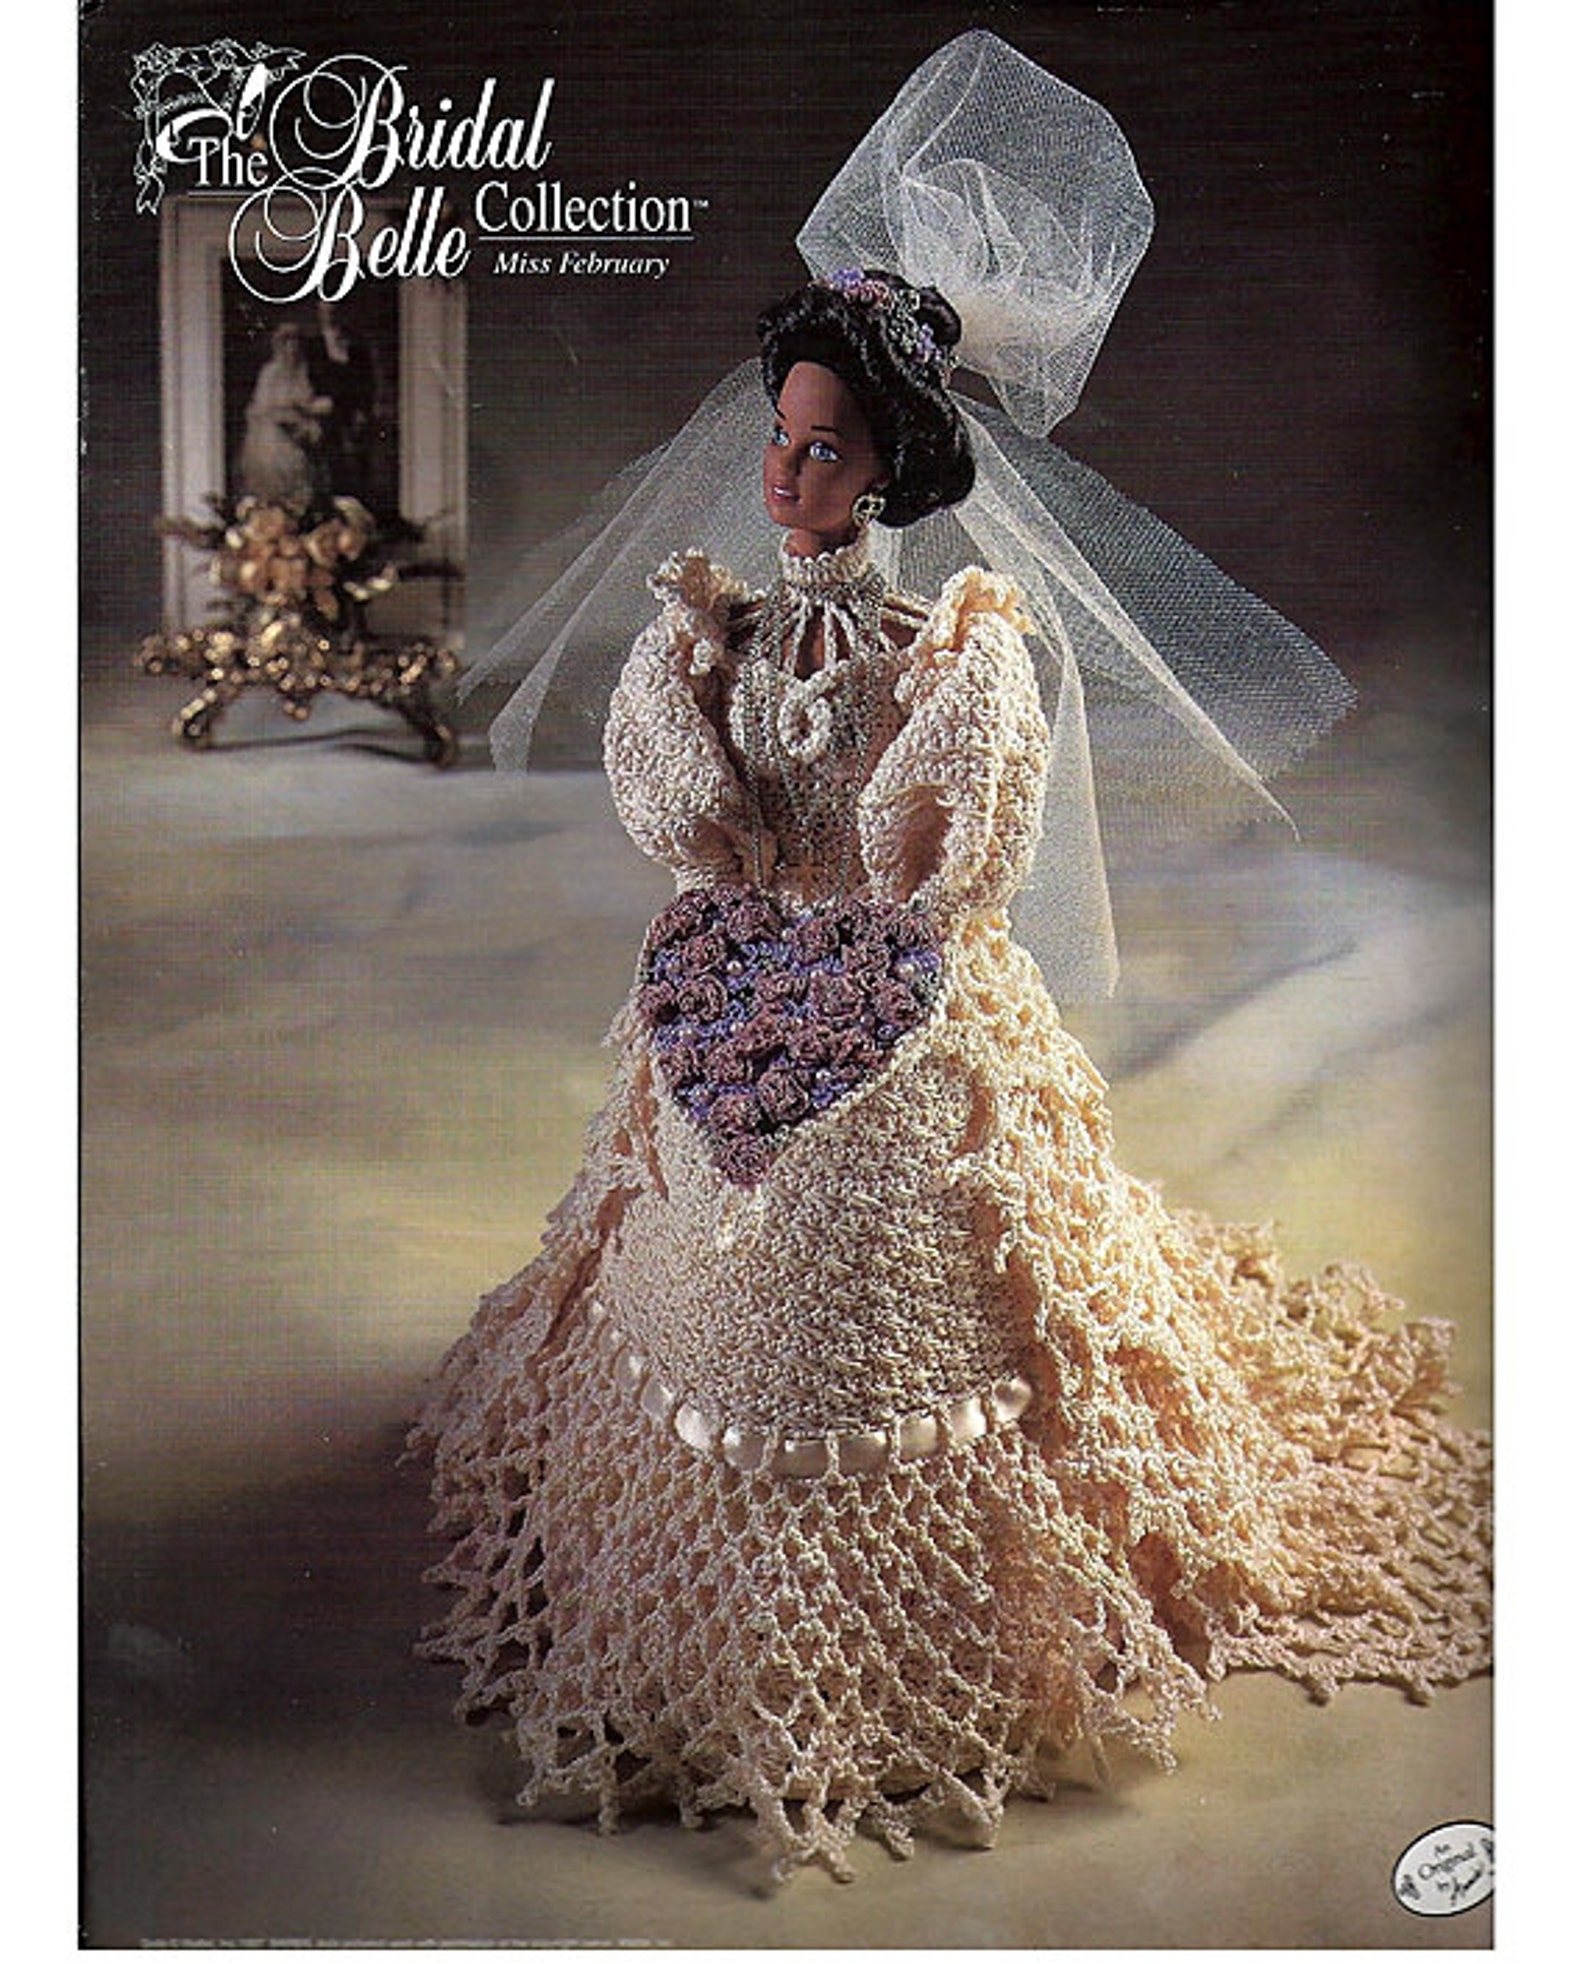 Bella collection. The Attic Annie’s Fashion Doll Crochet book Home Décor Bridal Gown Accessories.